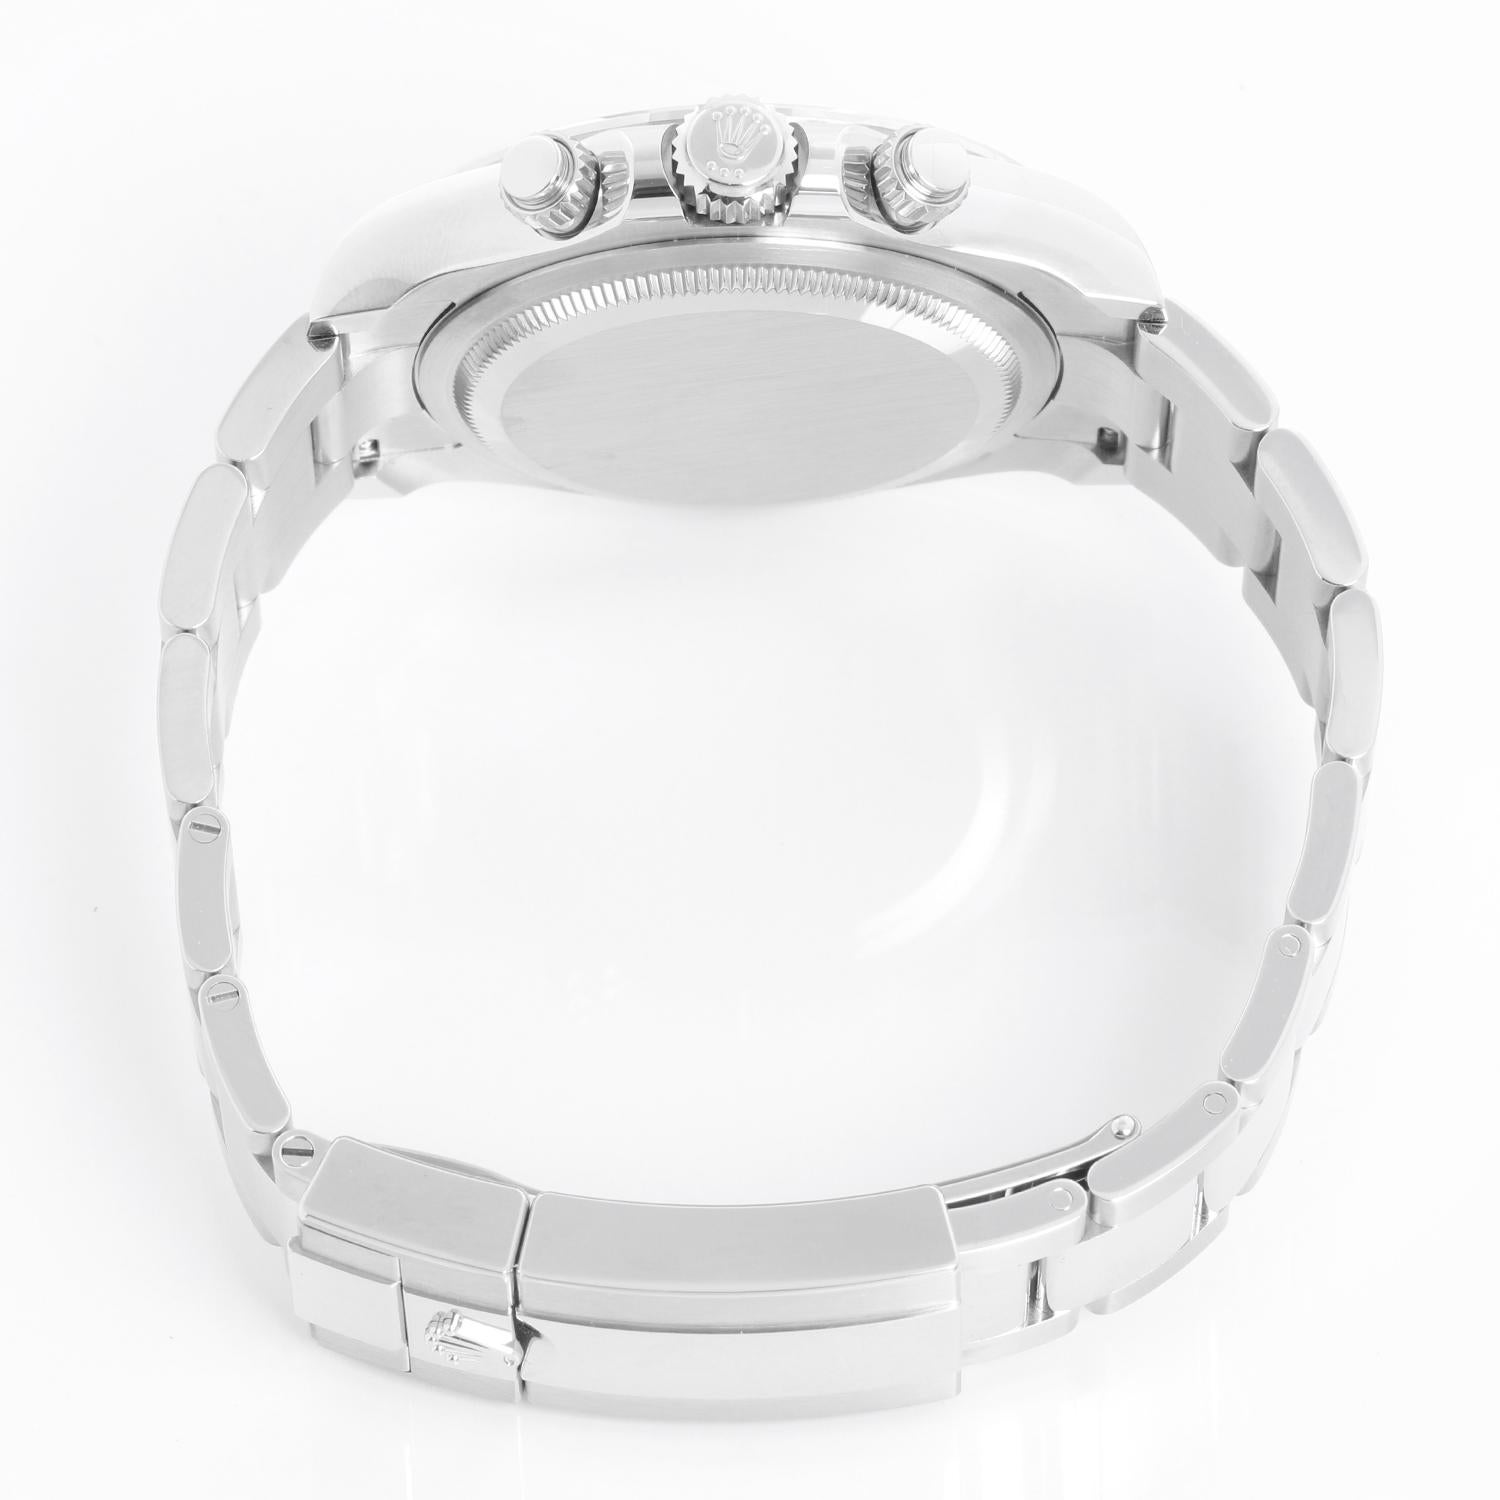 Men's Rolex Ceramic White dial Cosmograph Daytona 126500LN